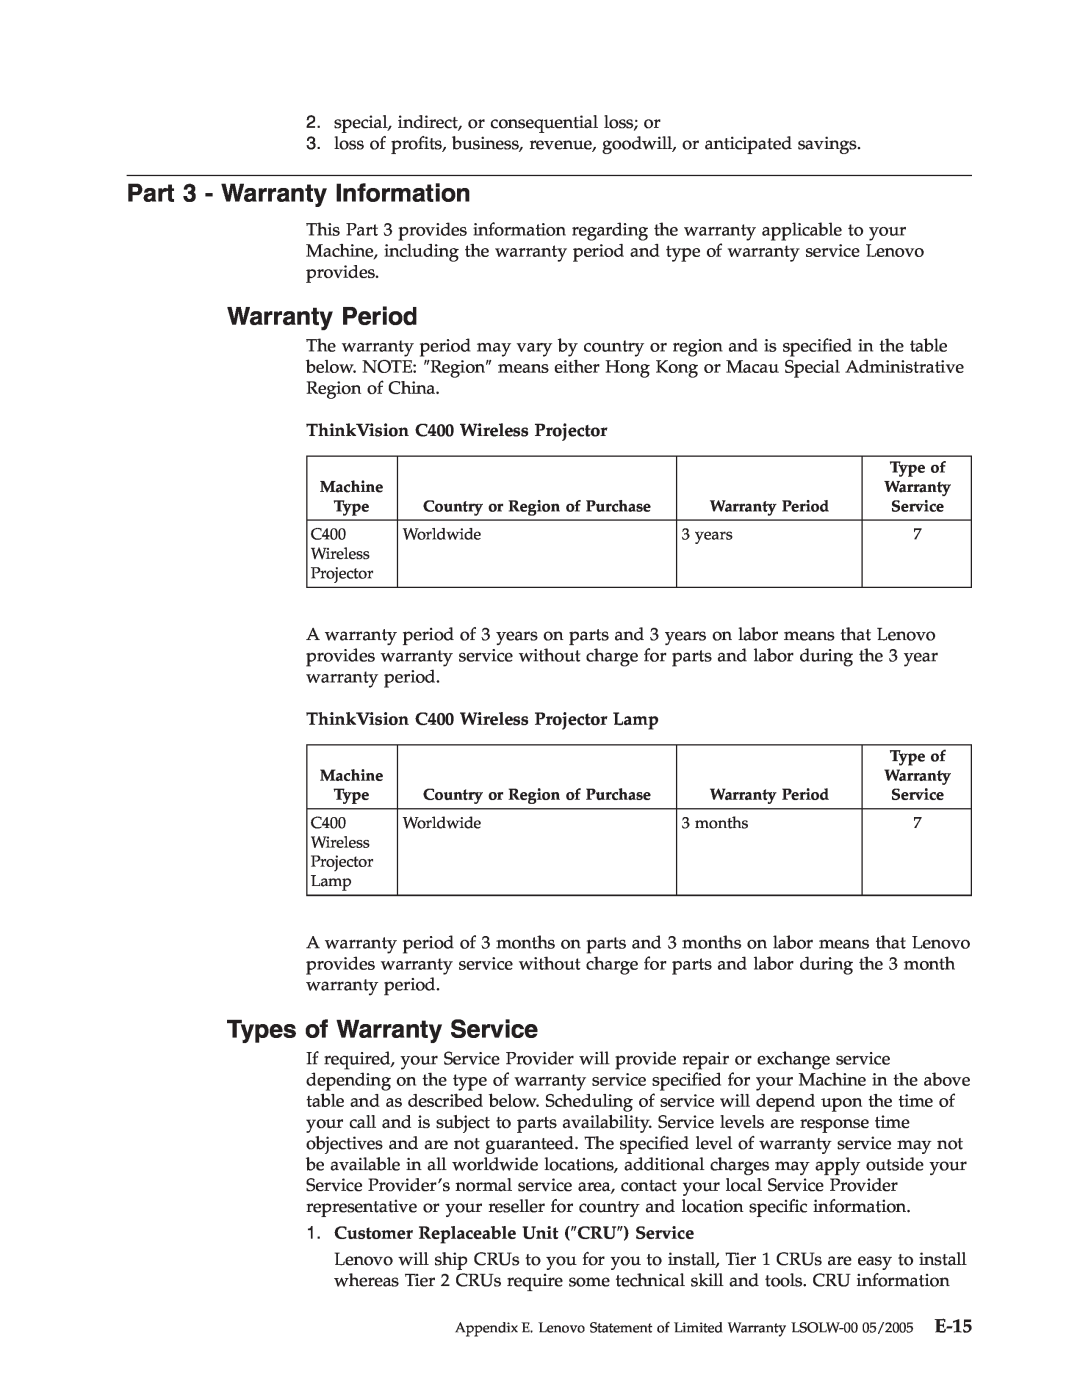 Lenovo Part 3 - Warranty Information, Warranty Period, Types of Warranty Service, ThinkVision C400 Wireless Projector 